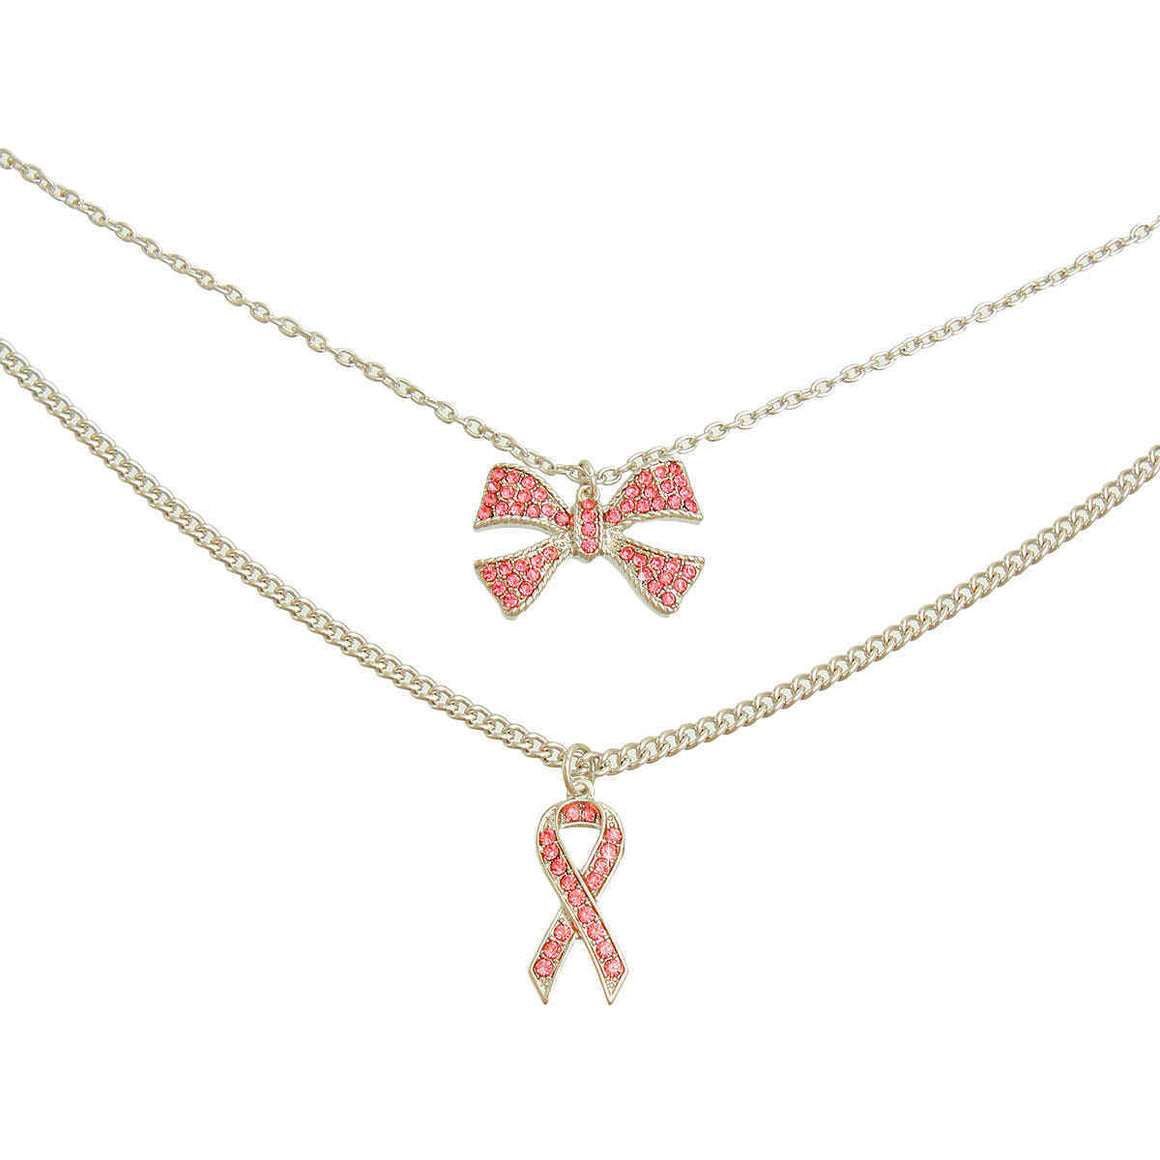 Rhinestone double Layer pink ribbon necklace